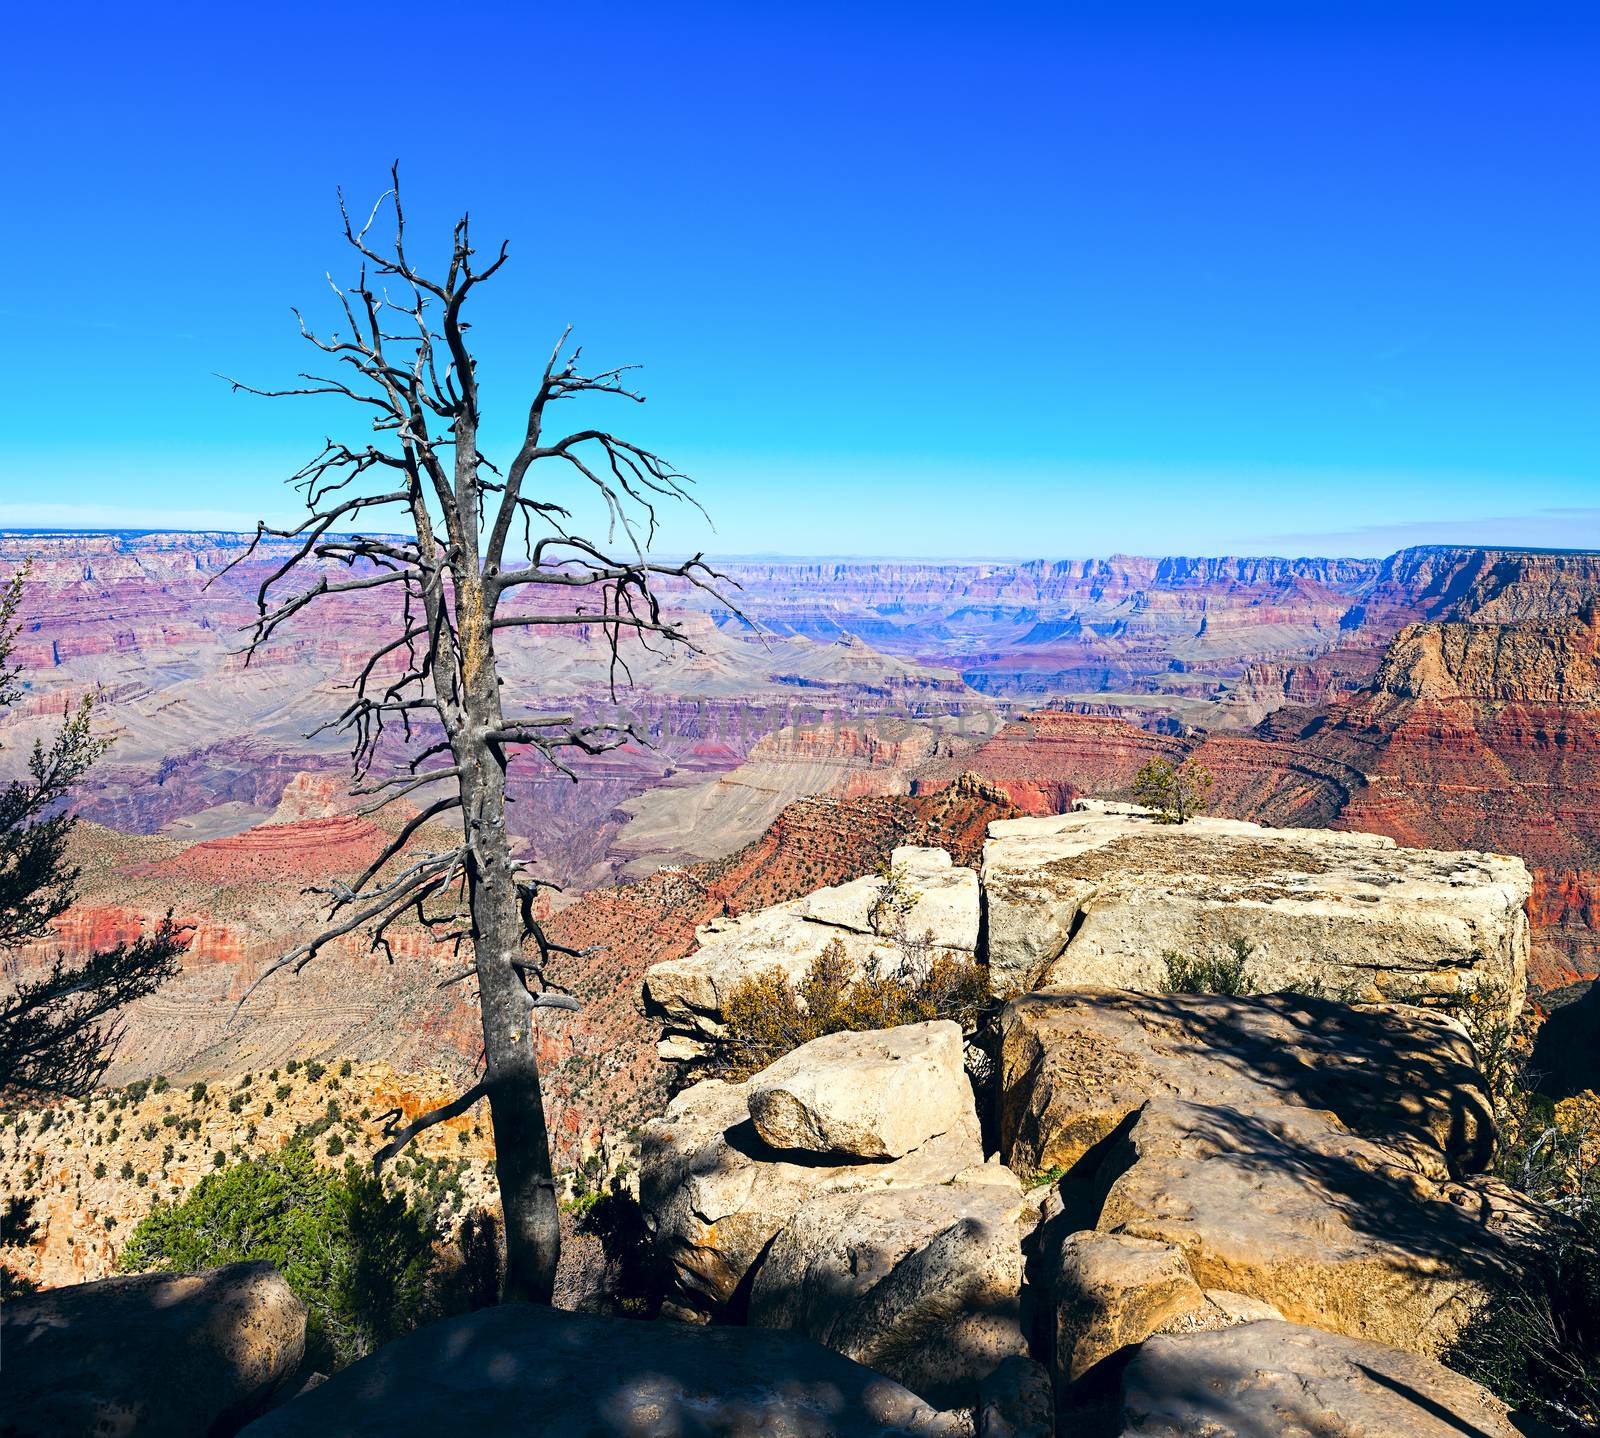 Grand Canyon and old dry tree foreground, Arizona, USA  by vladimir_sklyarov